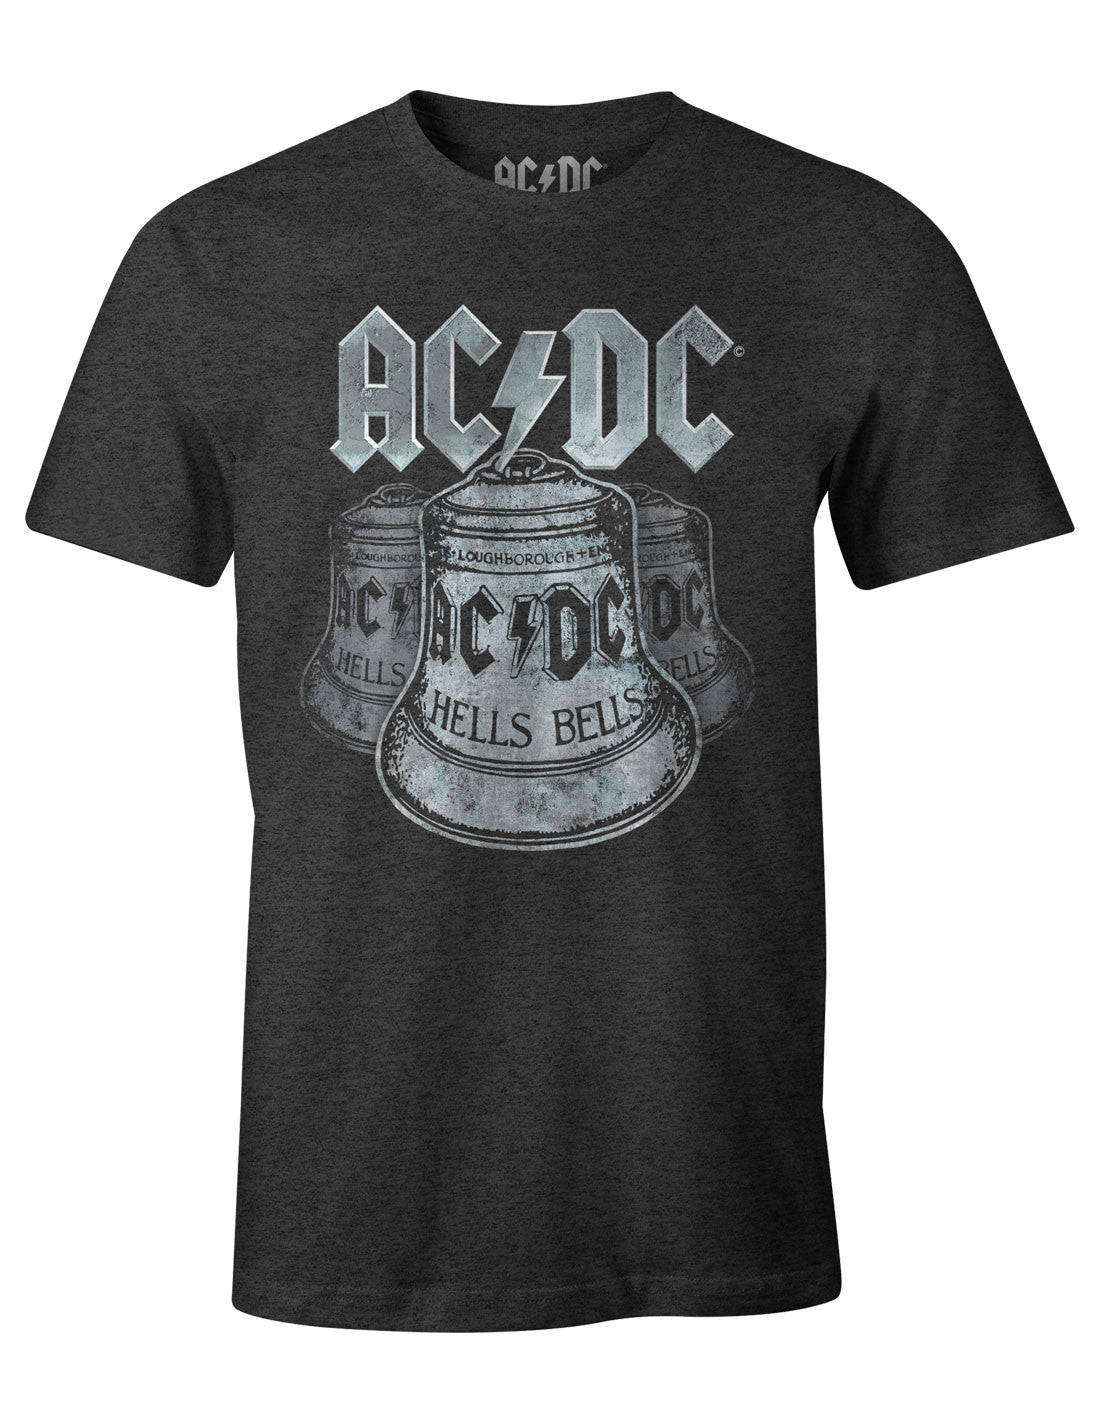 T-shirt AC/DC - Hells Bells